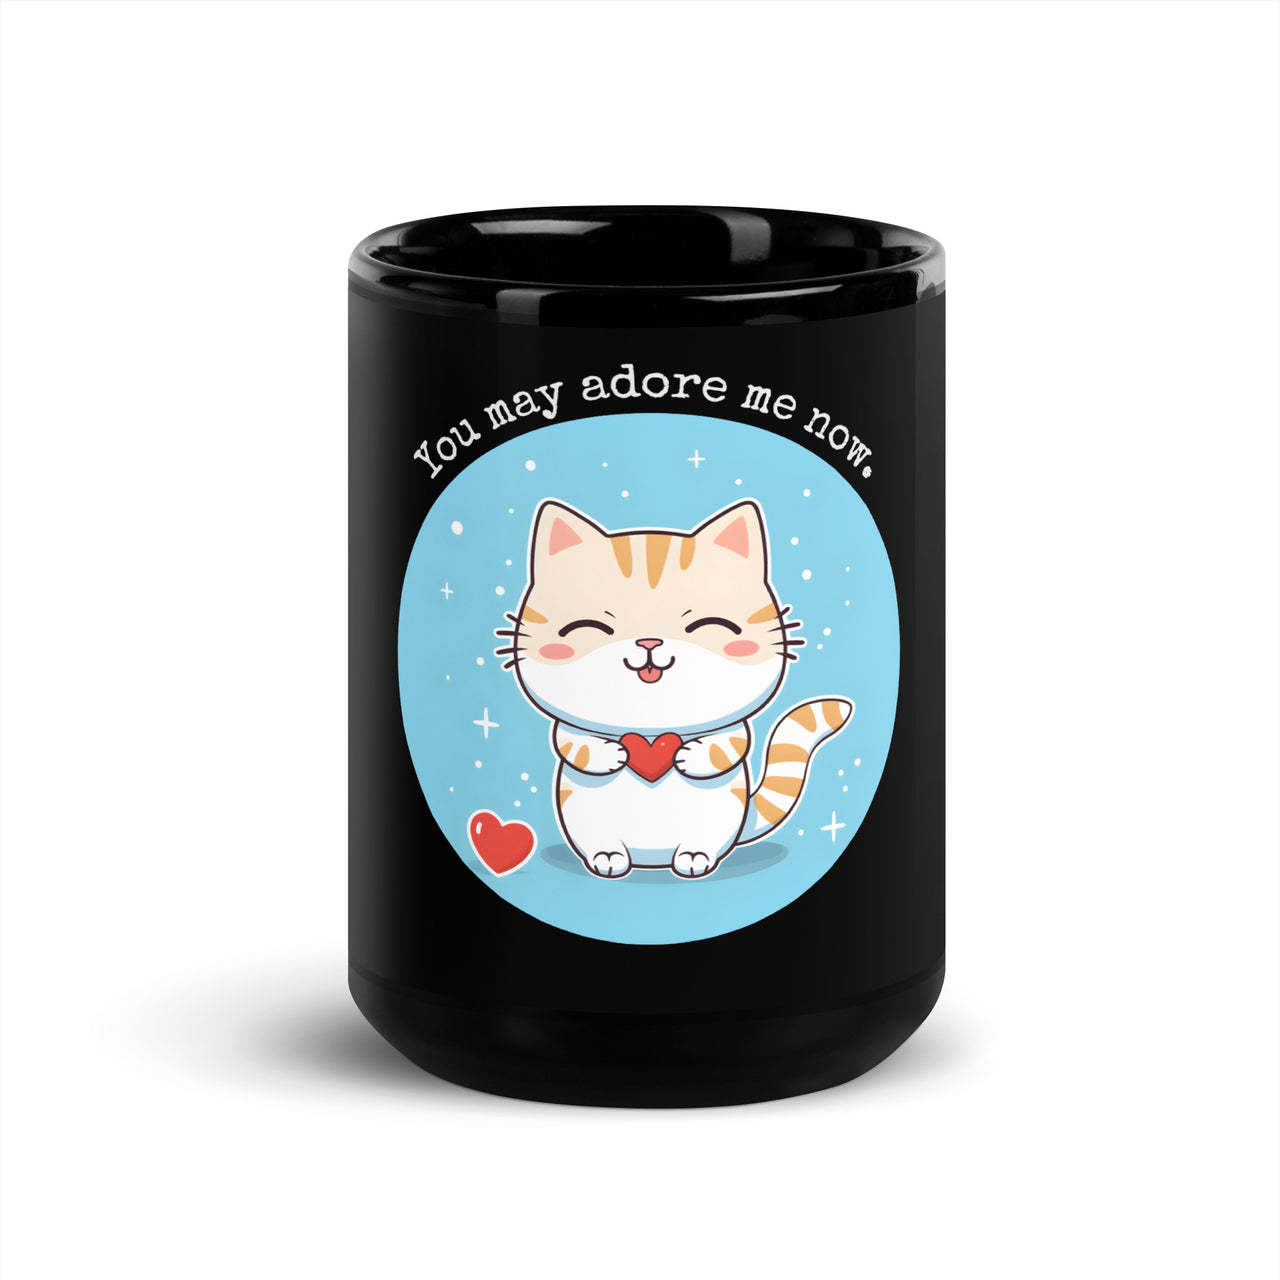 You May Adore Me Now: Cute Cat Love Black Mug